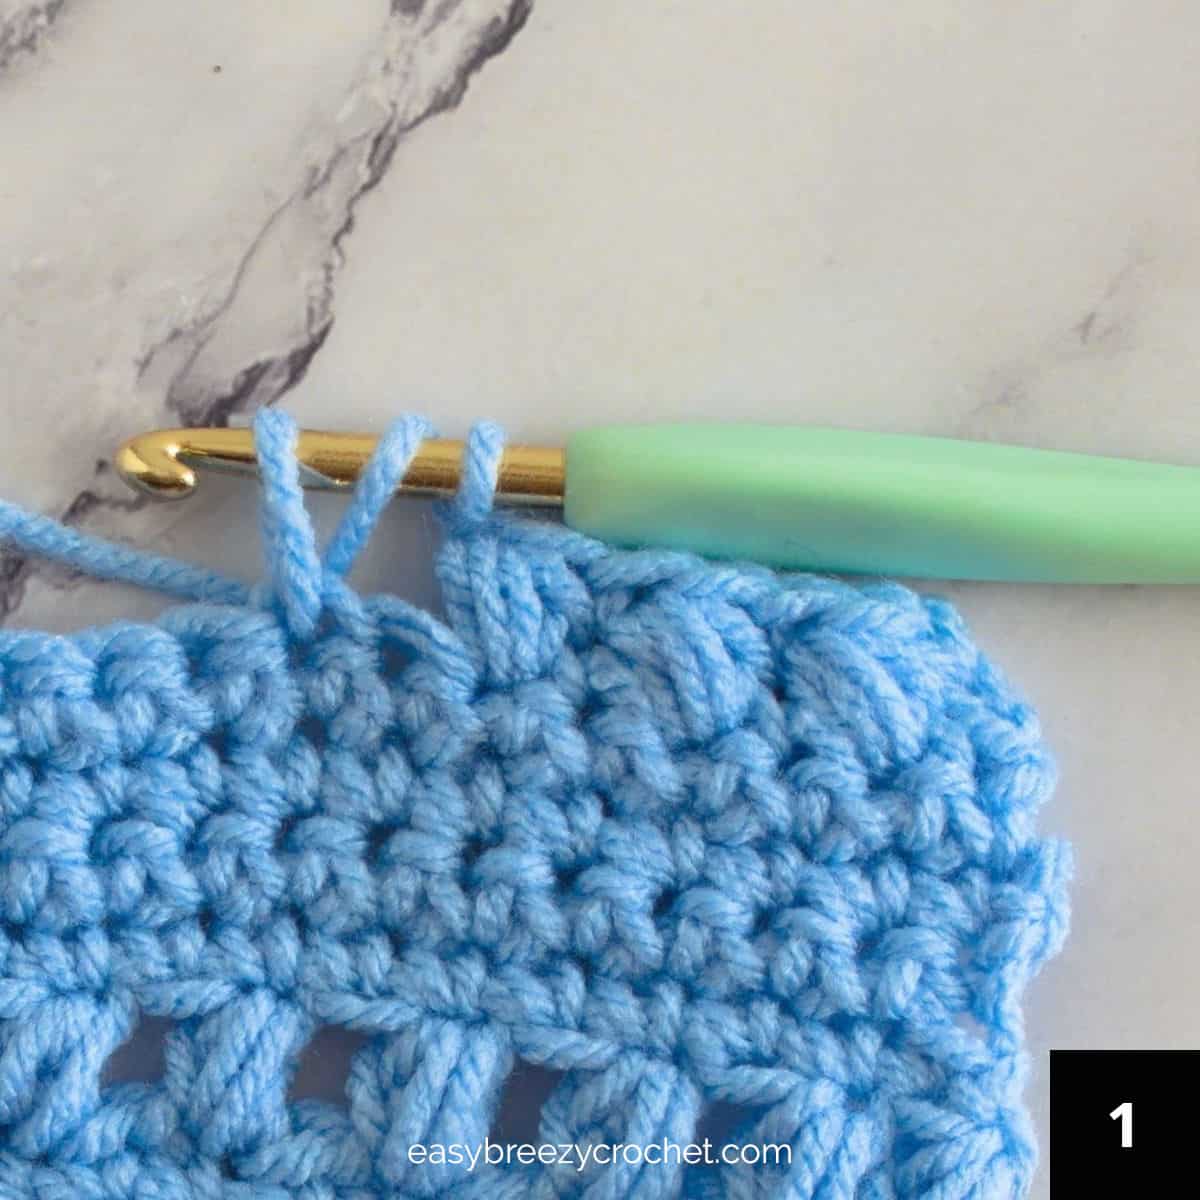 Three loops on a crochet hook.